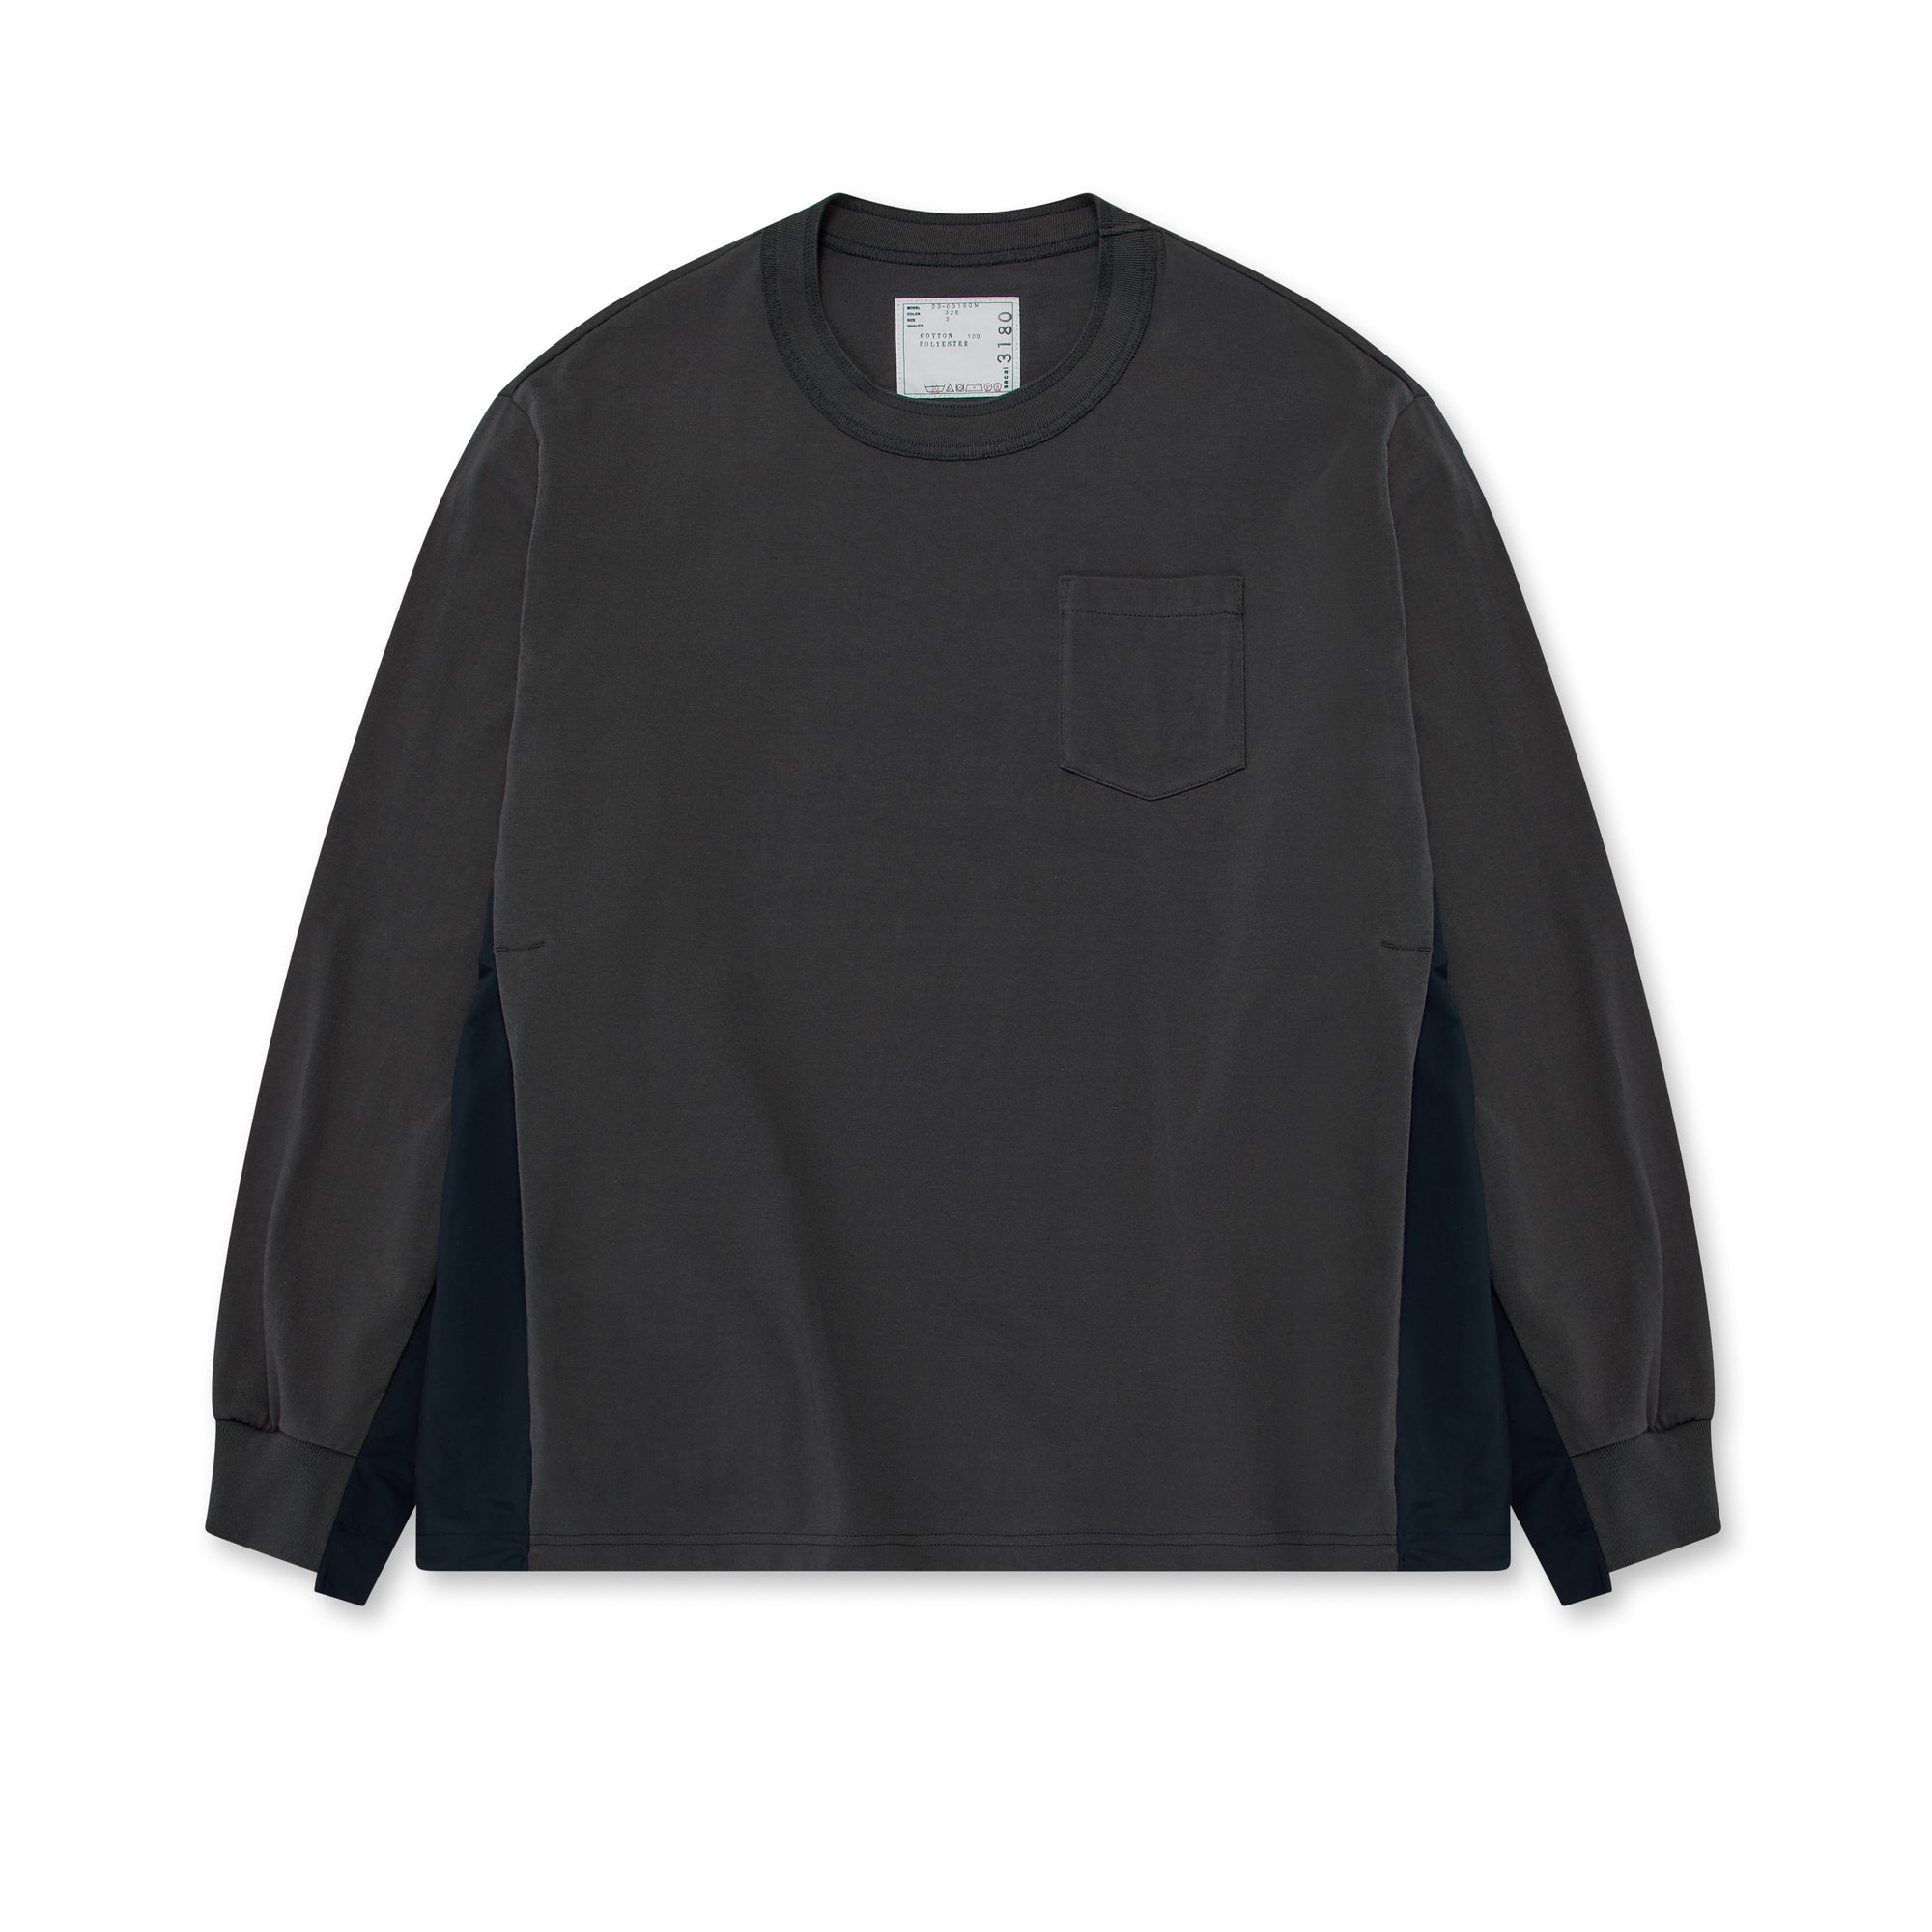 Sacai - Men’s Cotton Jersey L/S T-Shirt - (Charcoal) view 5